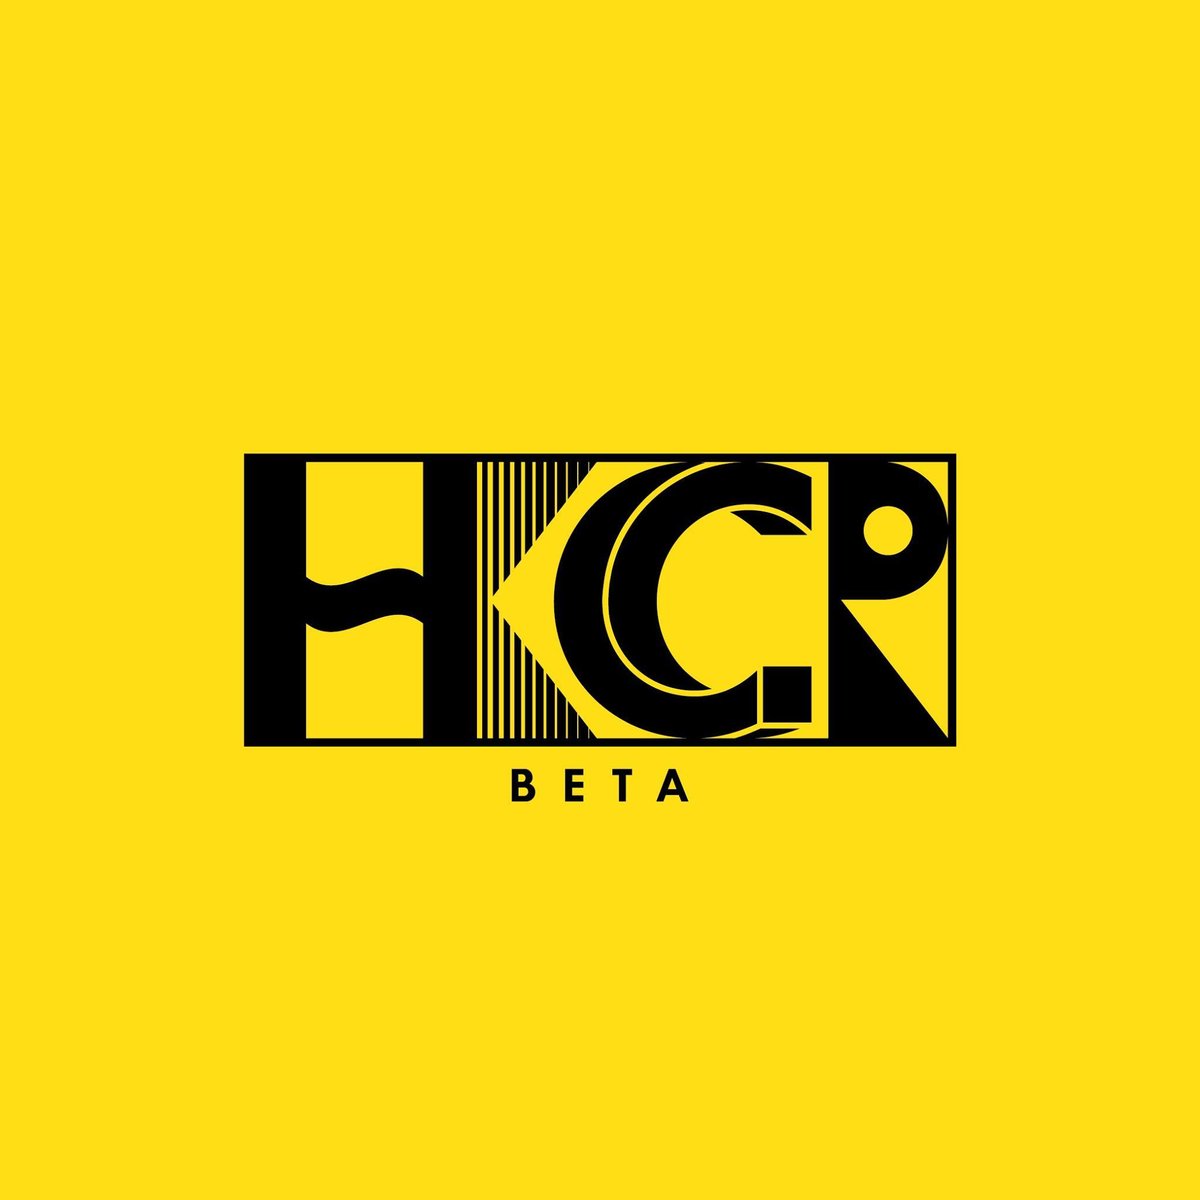 HKCR Store